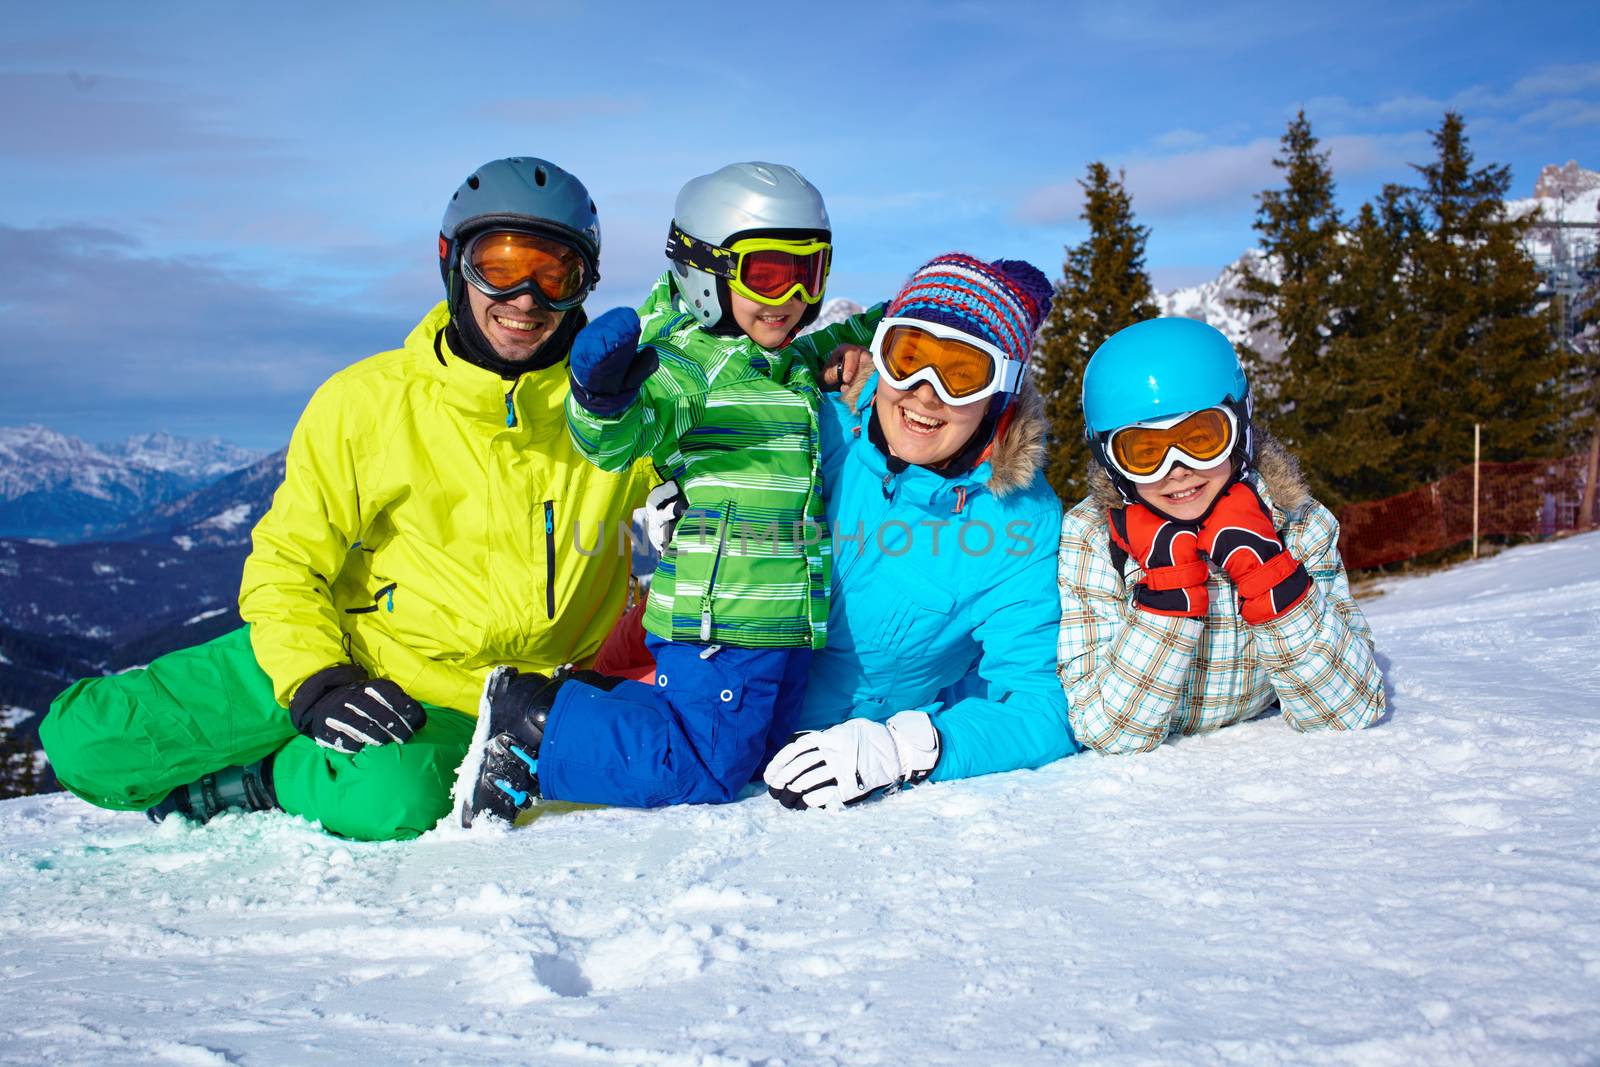 Skiers, sun and fun - Family enjoying winter vacations.